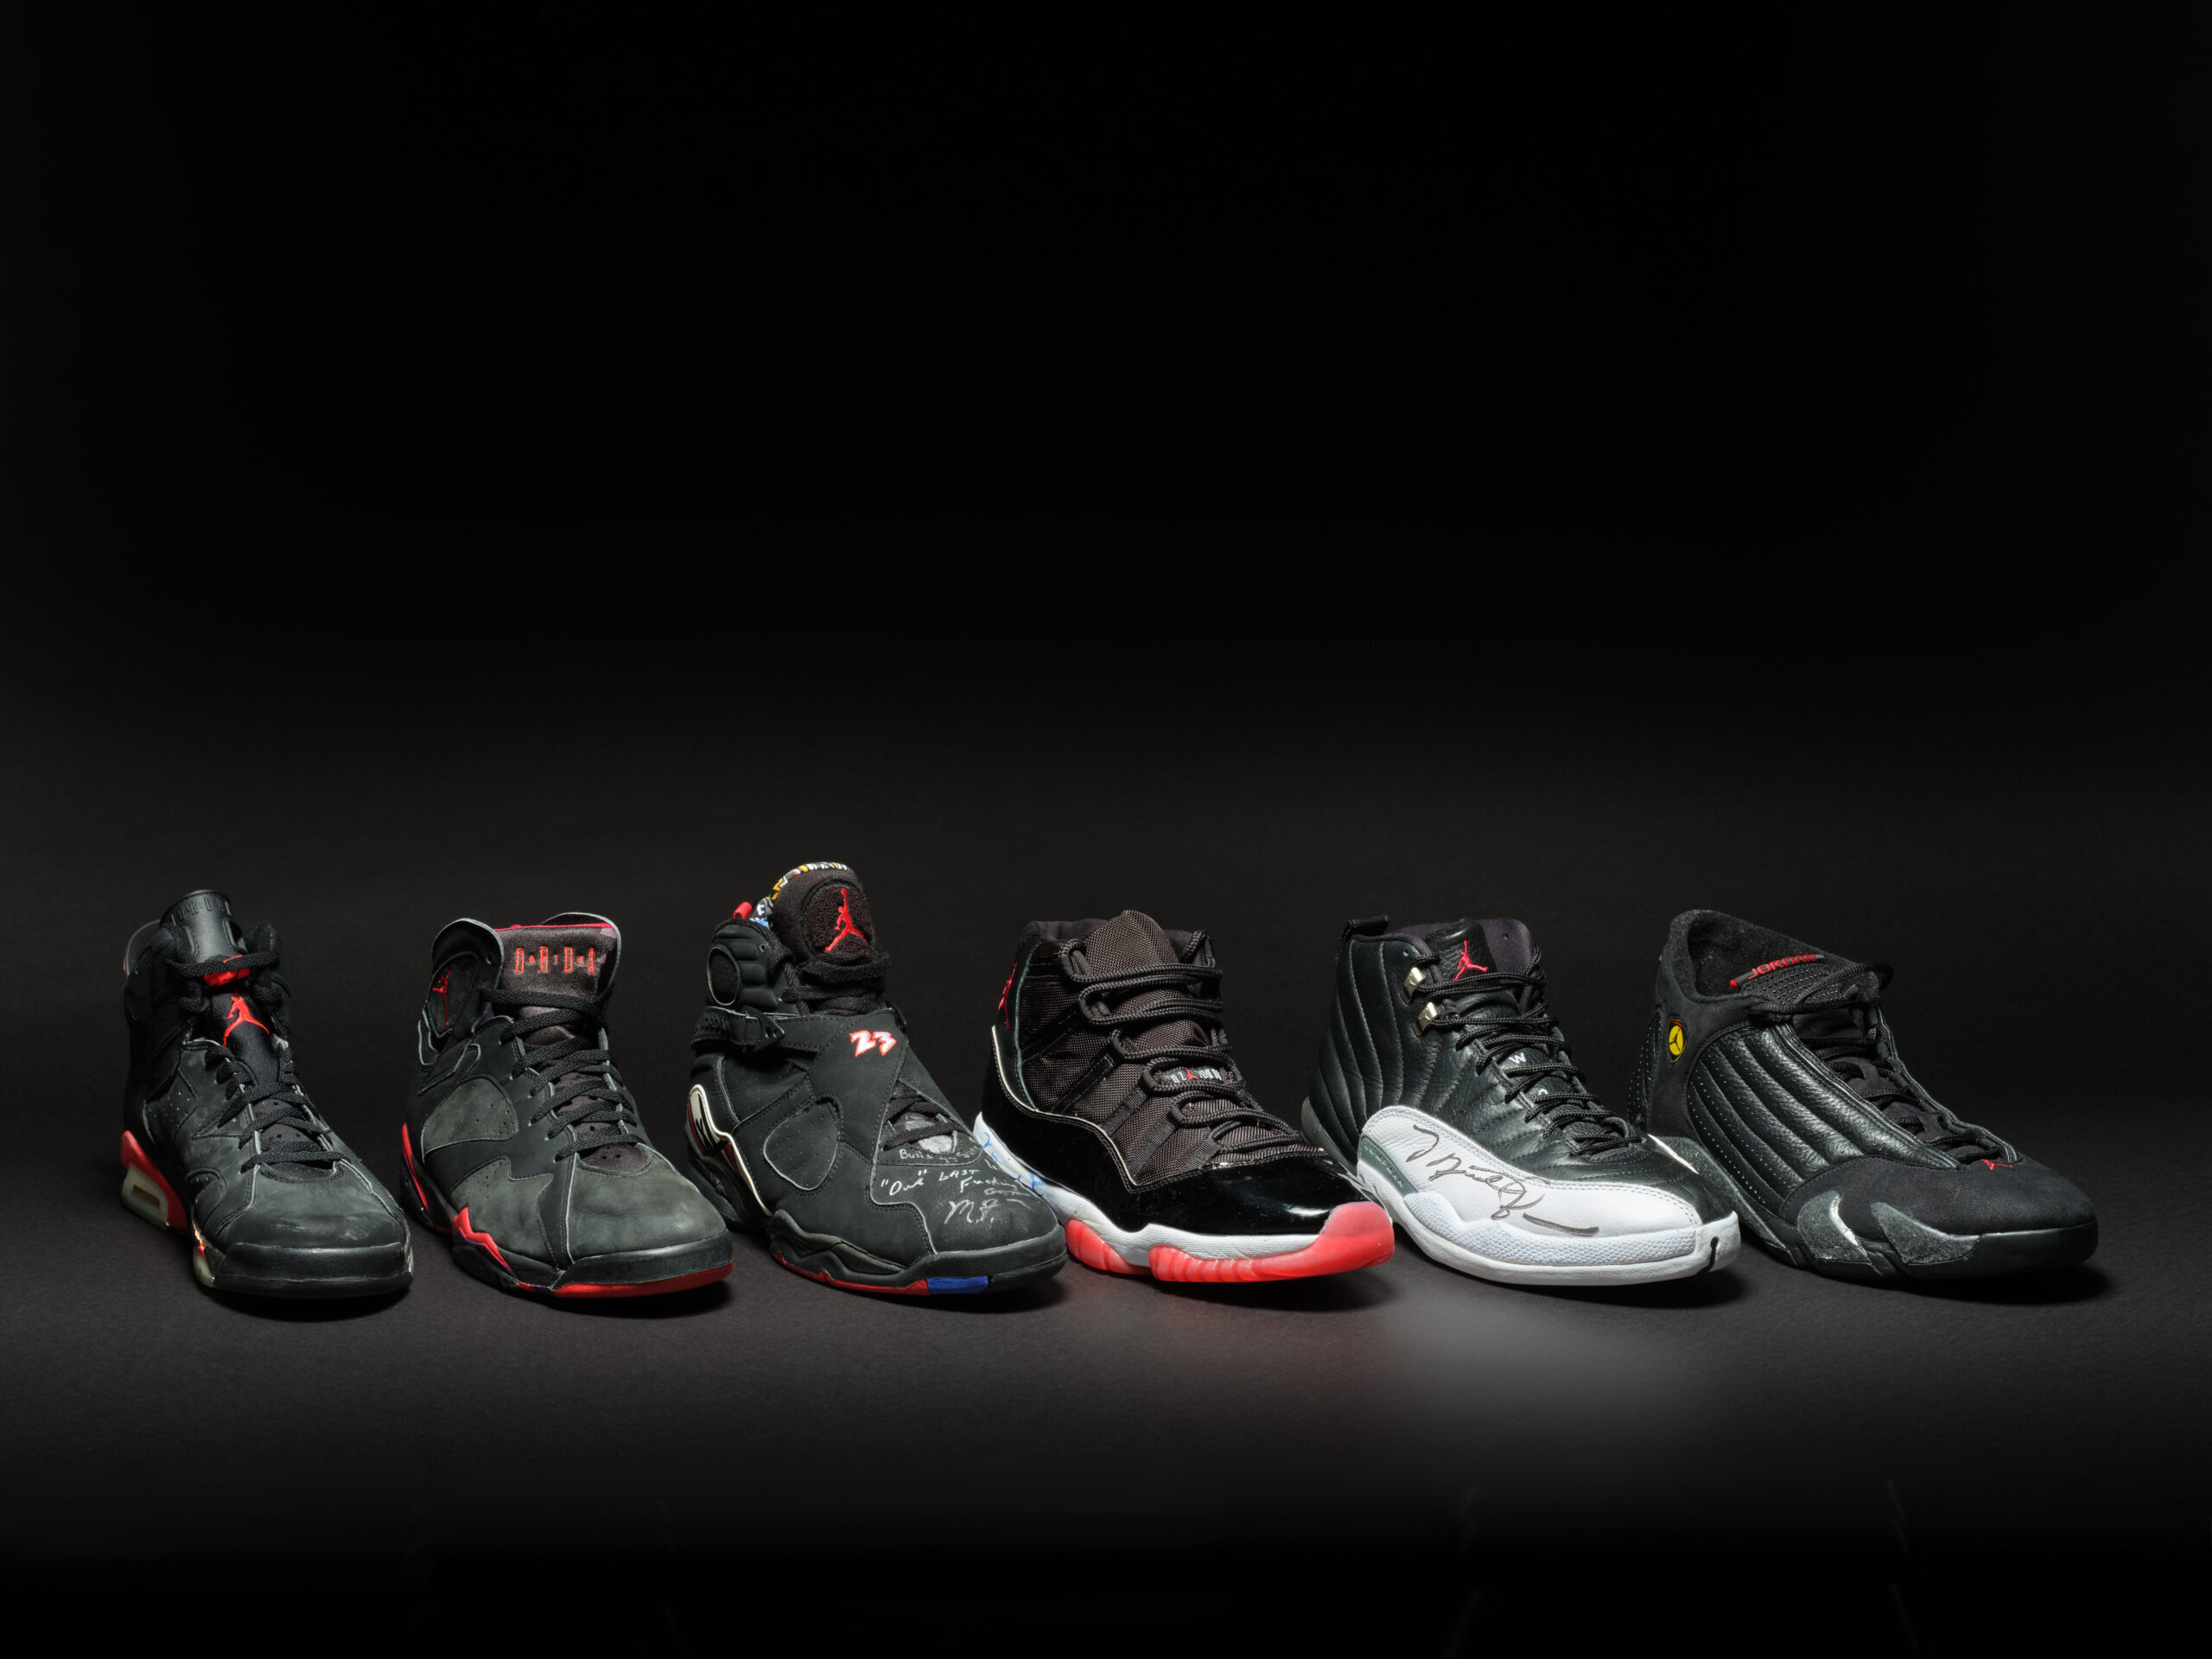 Michael Jordan game-worn championship sneakers.